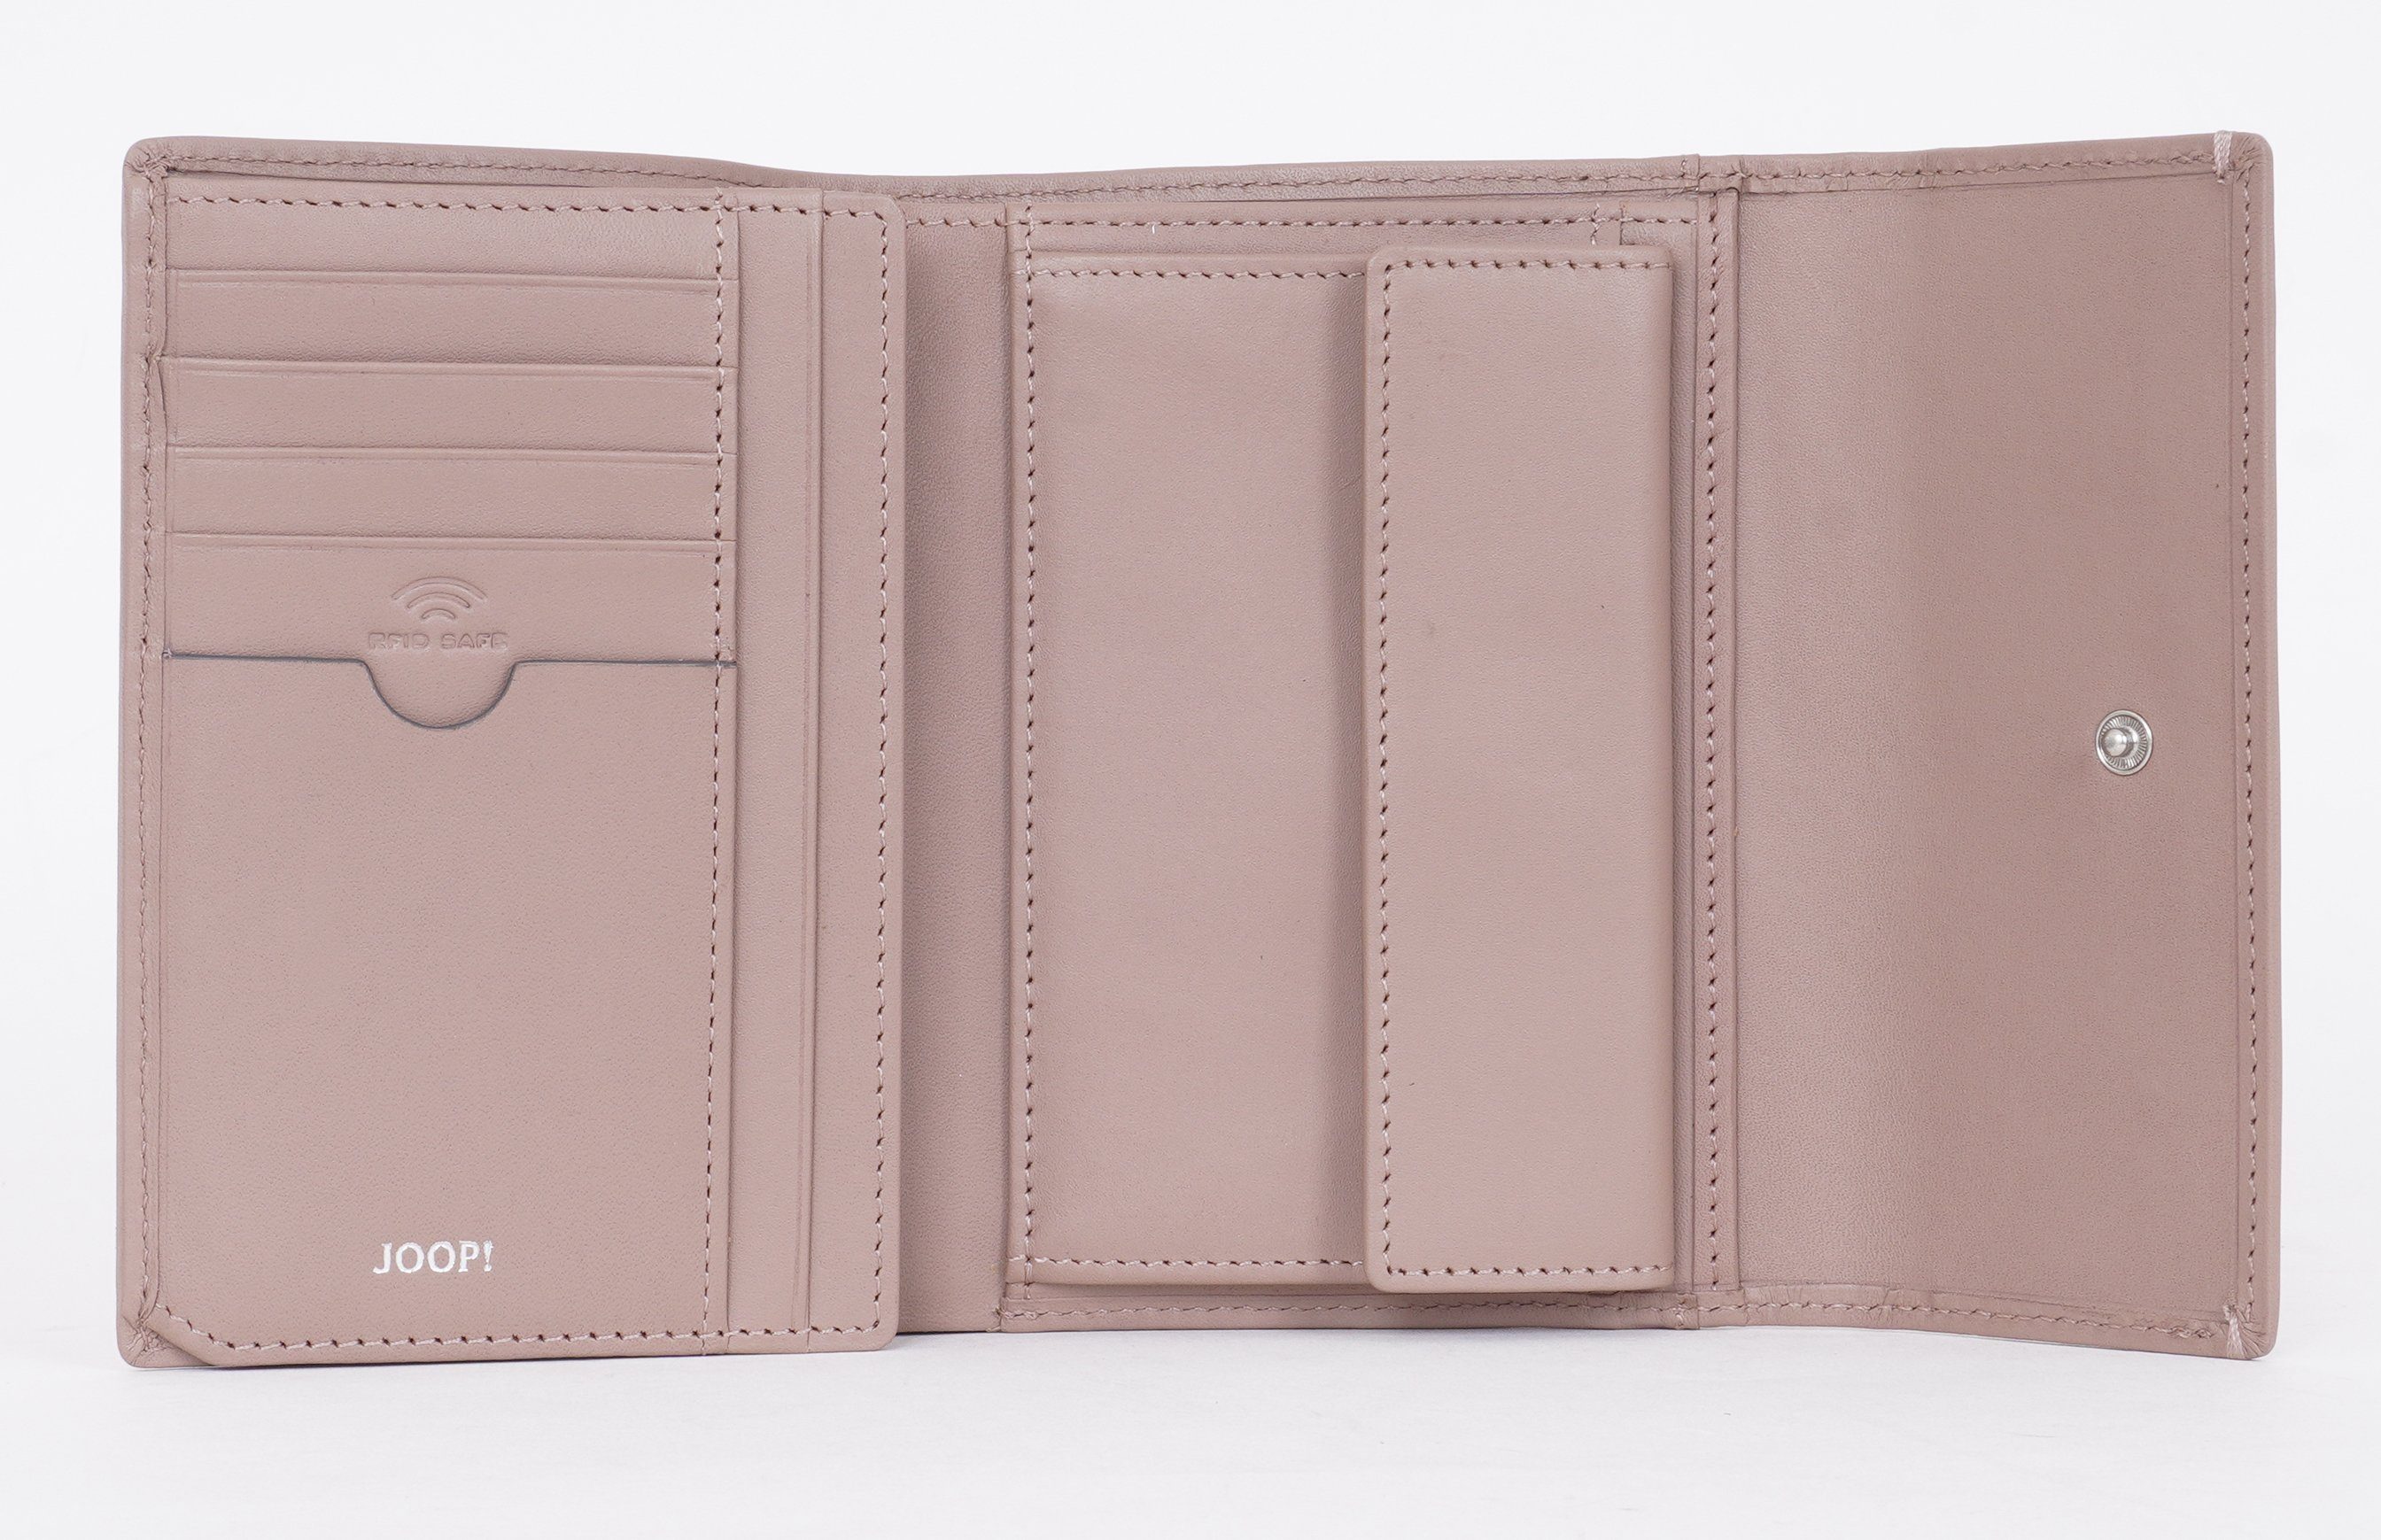 Joop! 1.0 purse mh10f, rosa cosma in Geldbörse sofisticato schlichtem Design